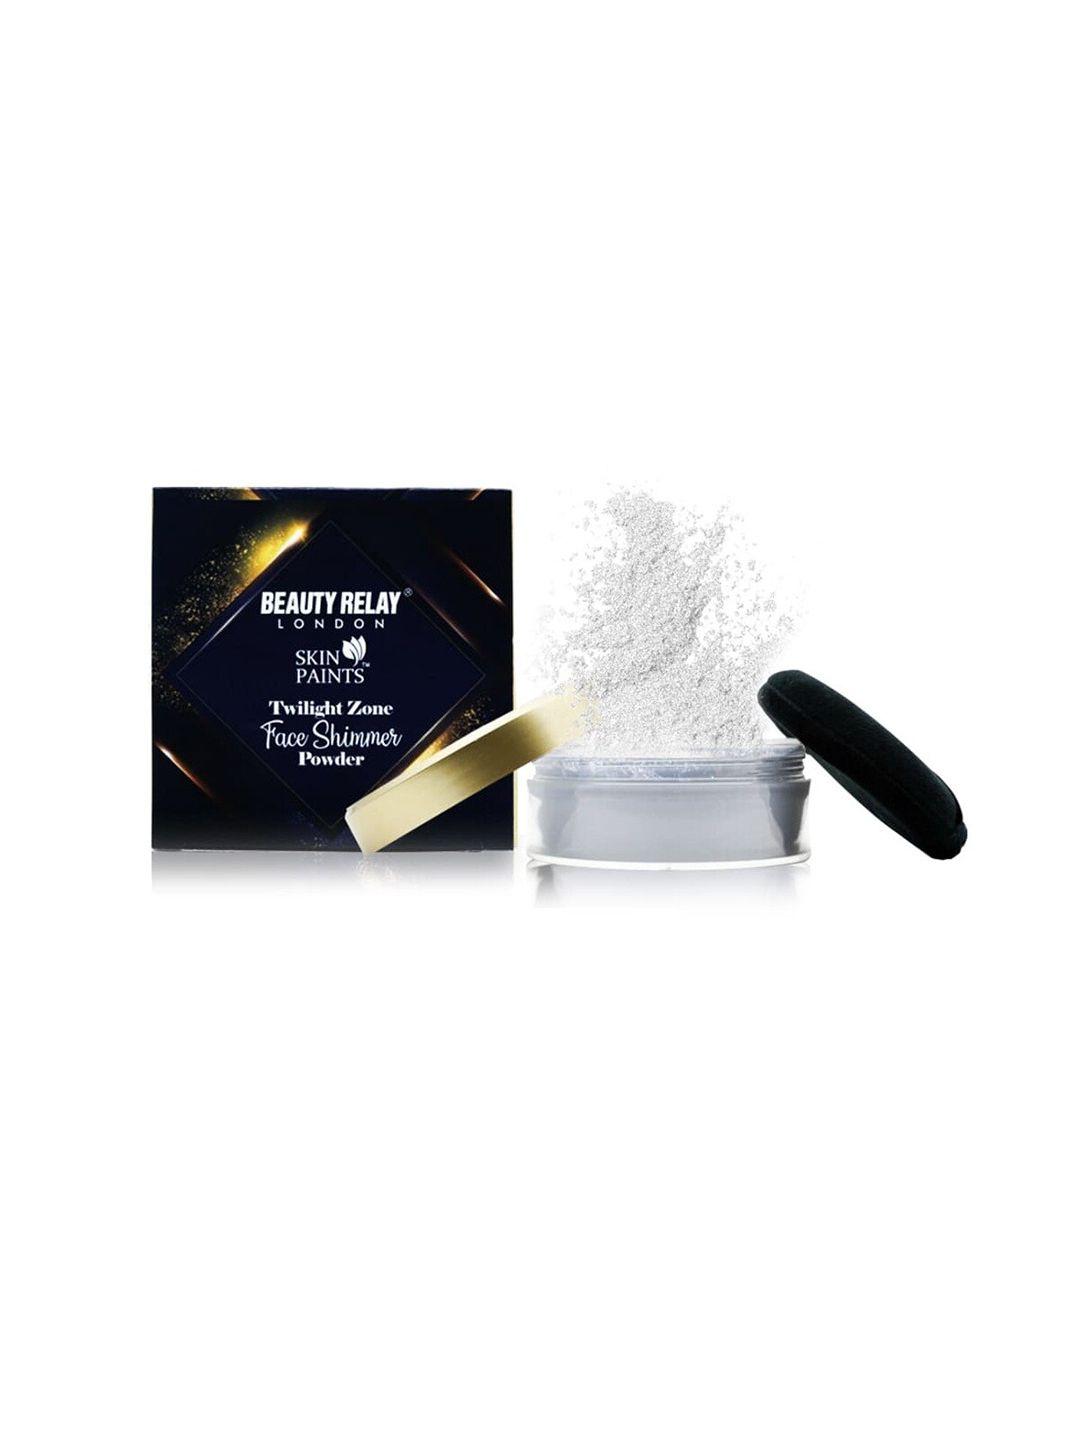 beautyrelay london skin paints twilight zone face shimmer powder - face white 25 g